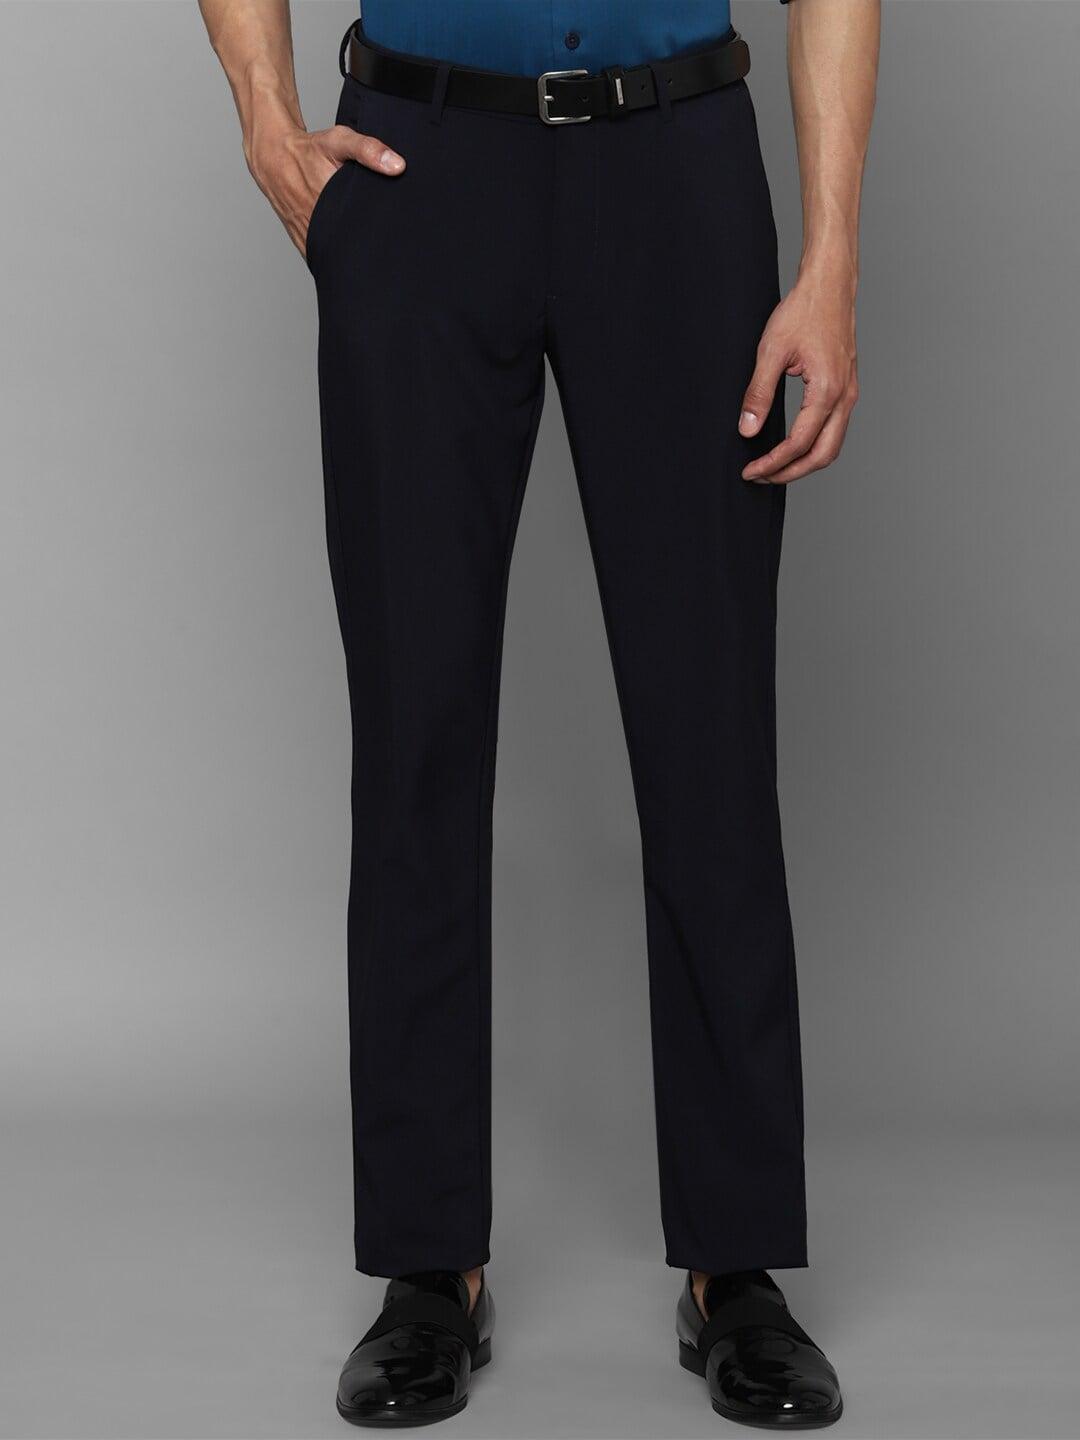 allen-solly-men-black-slim-fit-formal-trouser